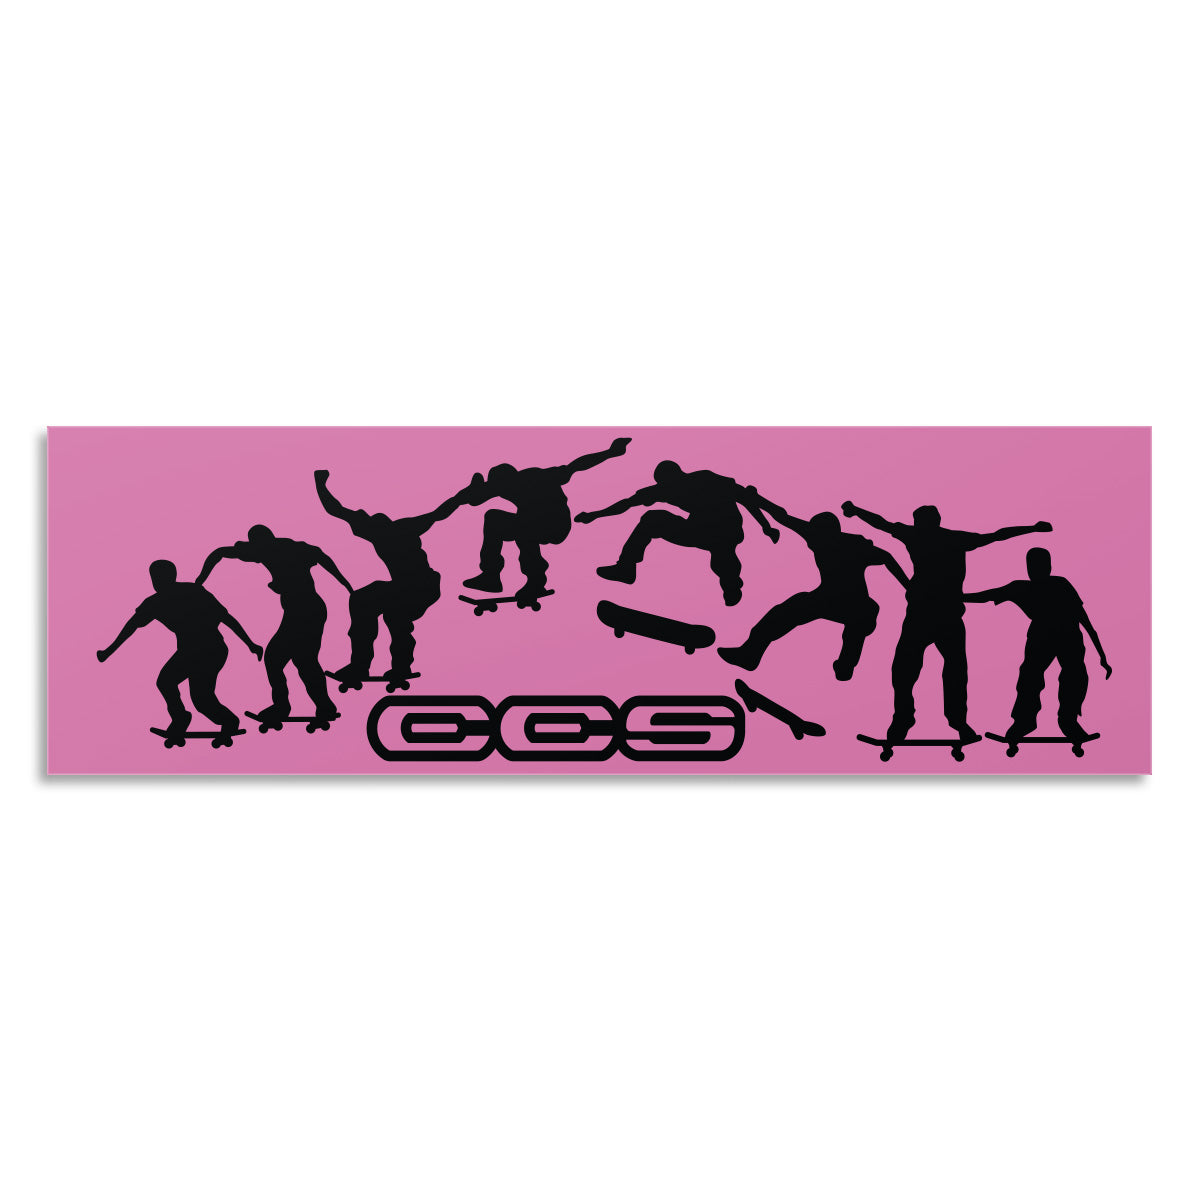 CCS Kickflip Sticker - Pink/Black image 1